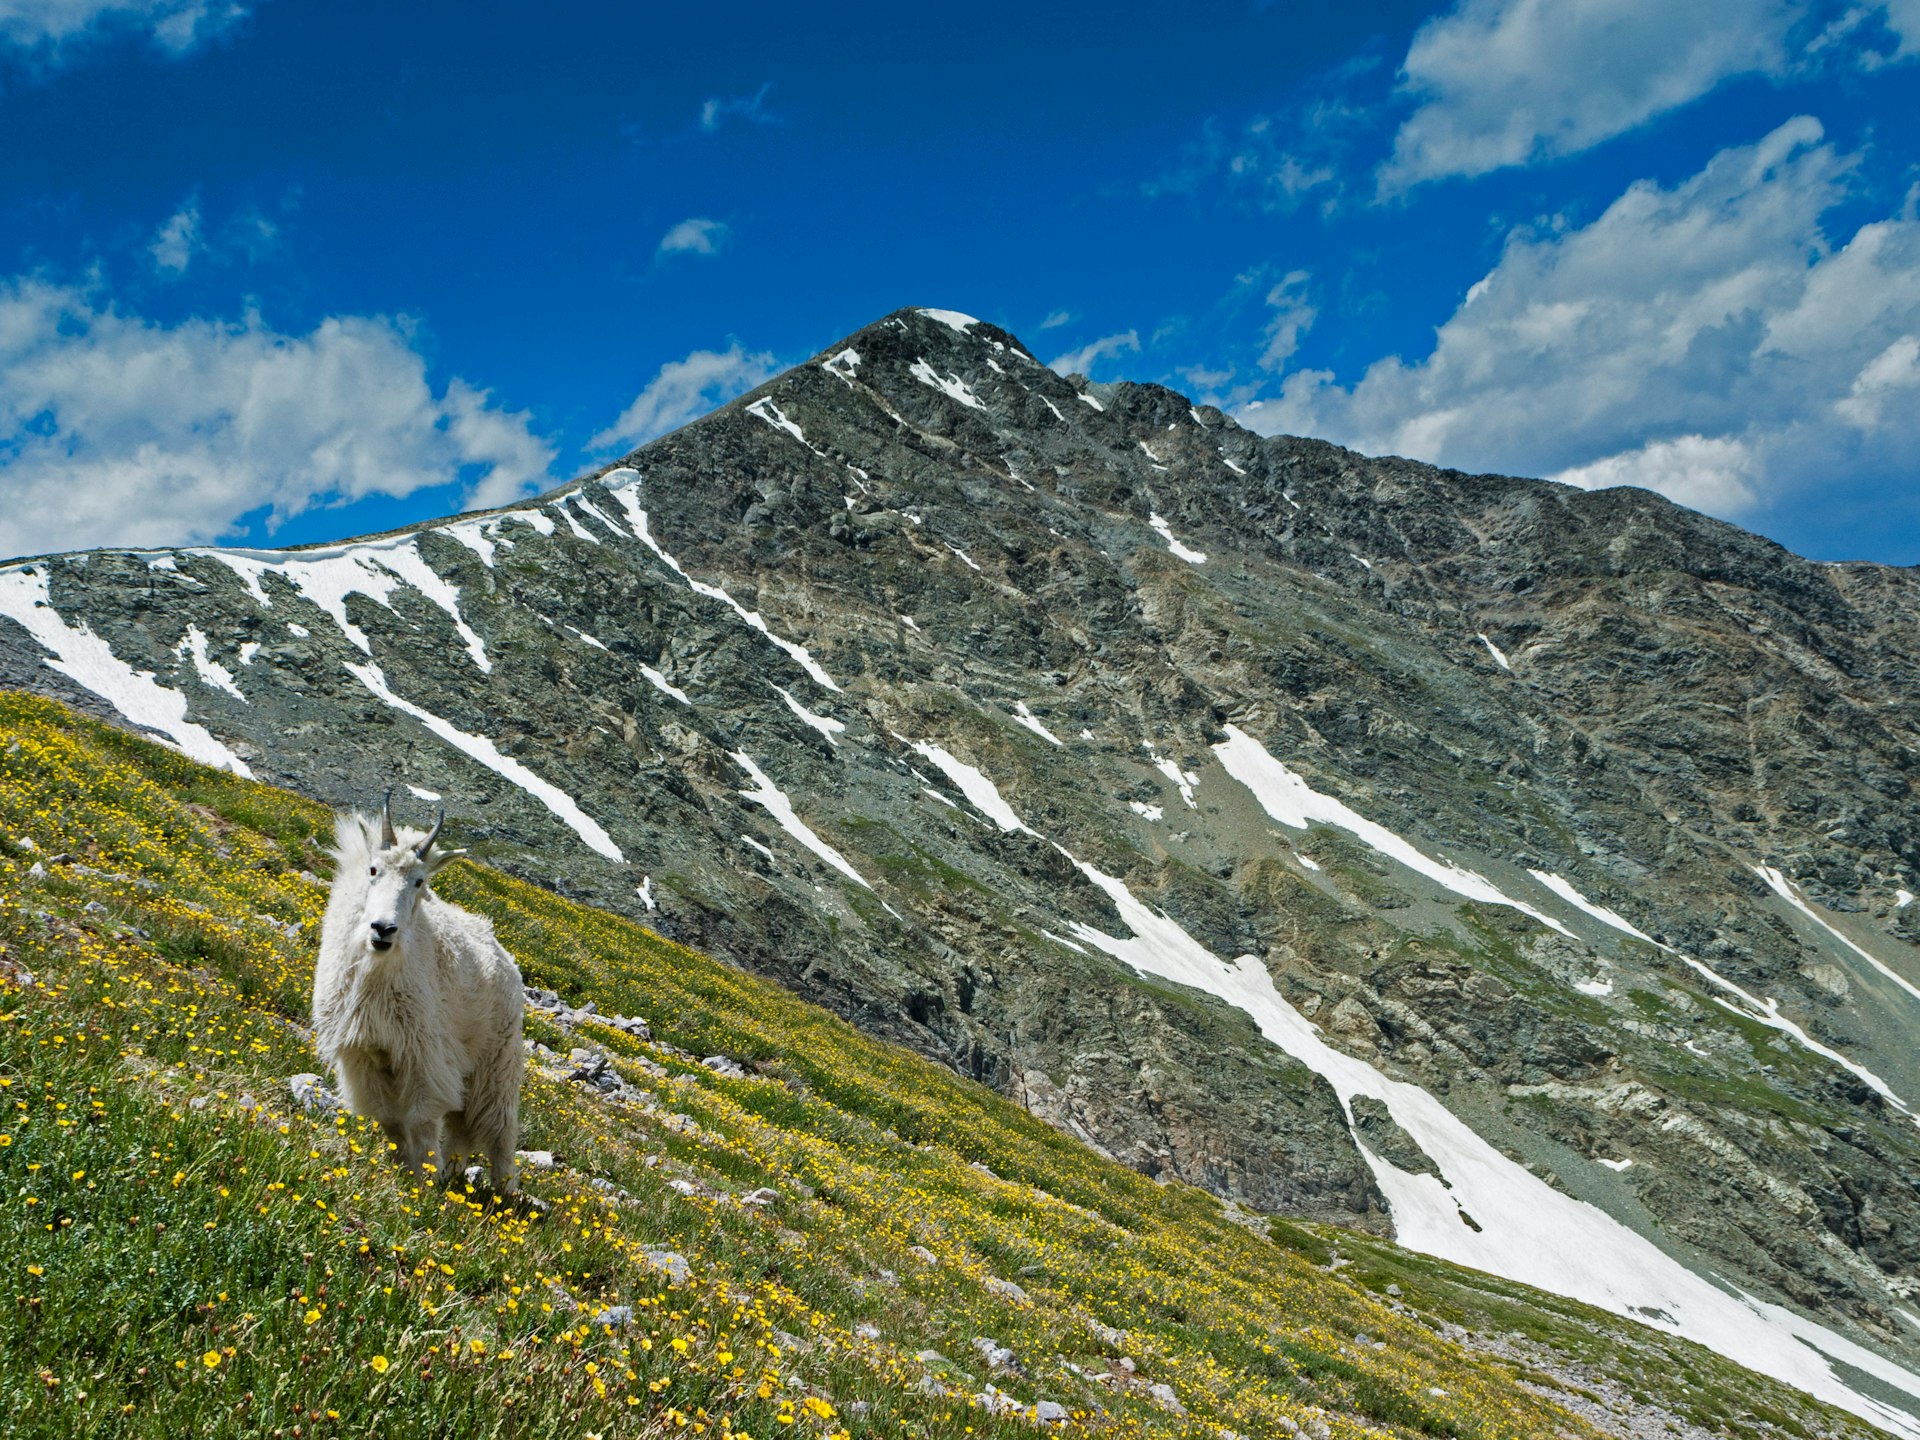 Mountain goat grazing on wildflowers in front of Torreys Peak